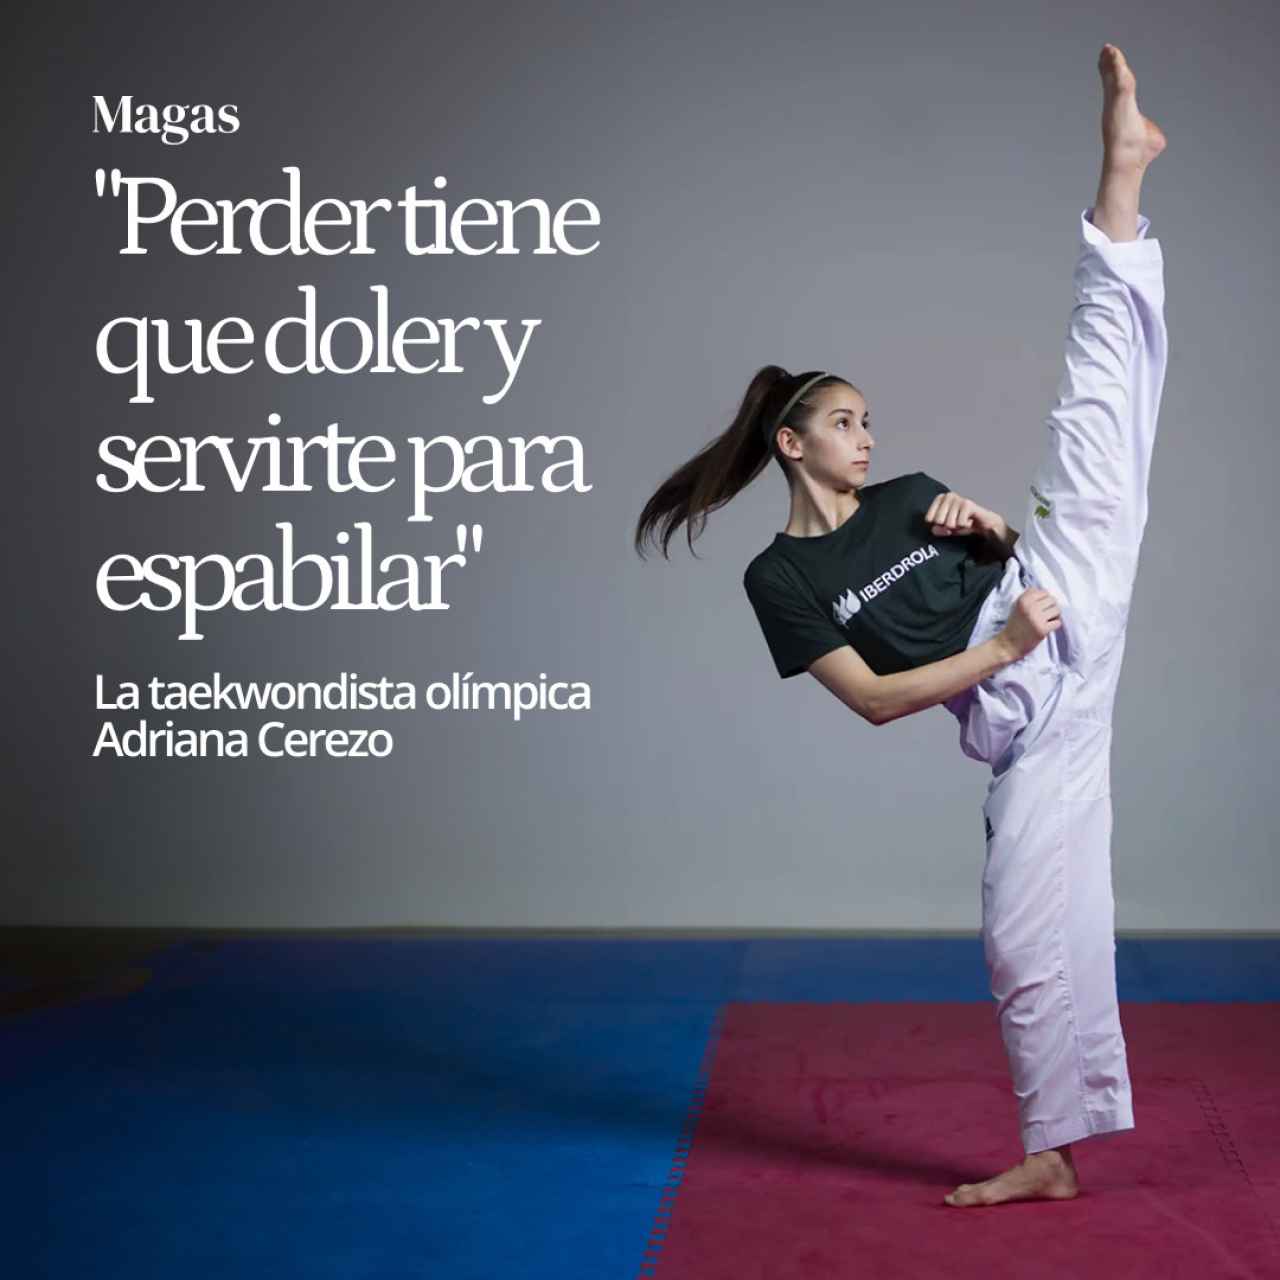 La taekwondista olímpica Adriana Cerezo: “Perder tiene que doler. No te tiene que hundir, sino servirte para espabilar”